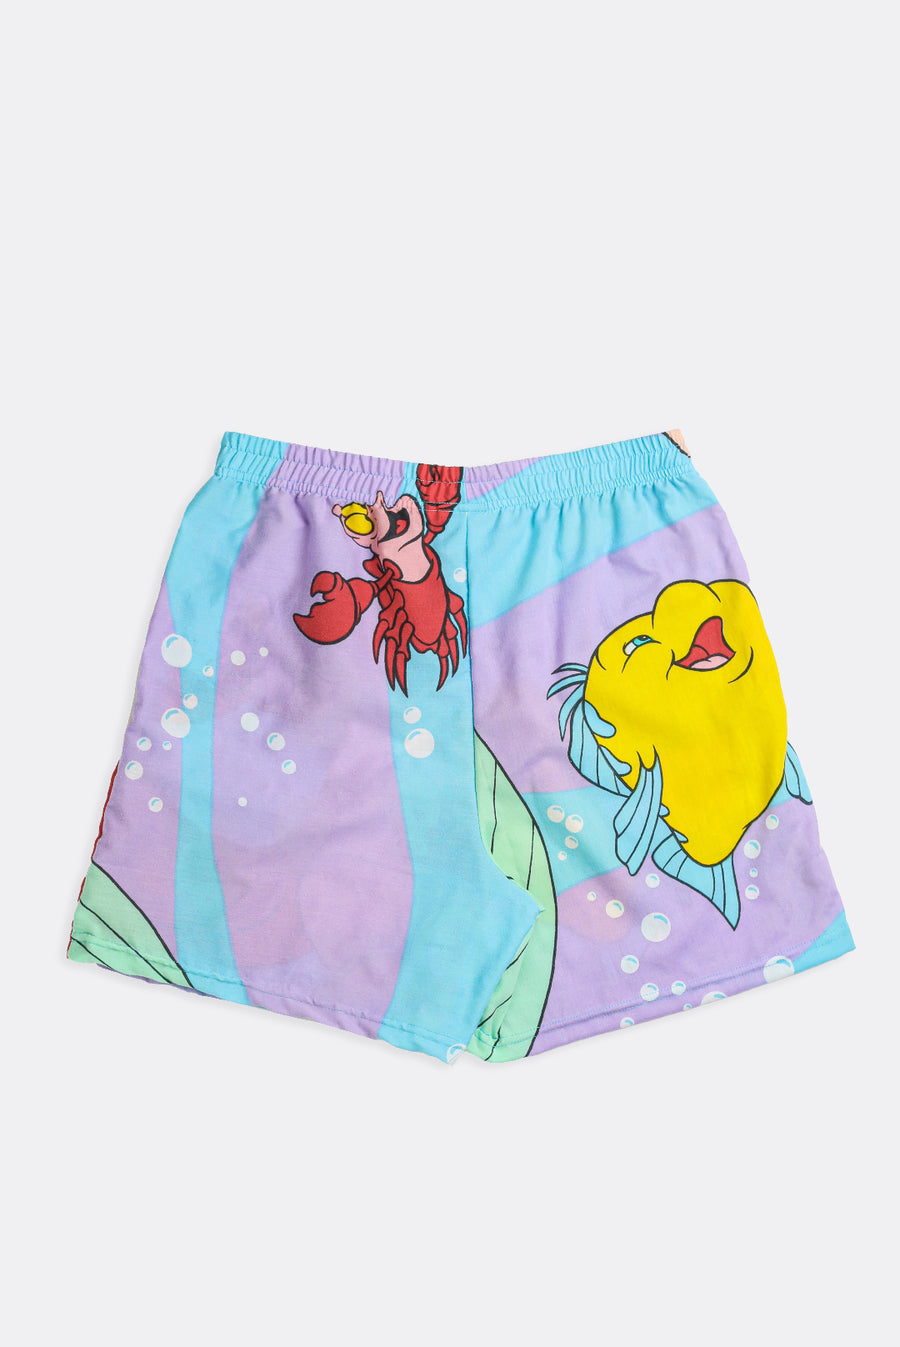 Unisex Rework The Little Mermaid Boxer Shorts - L